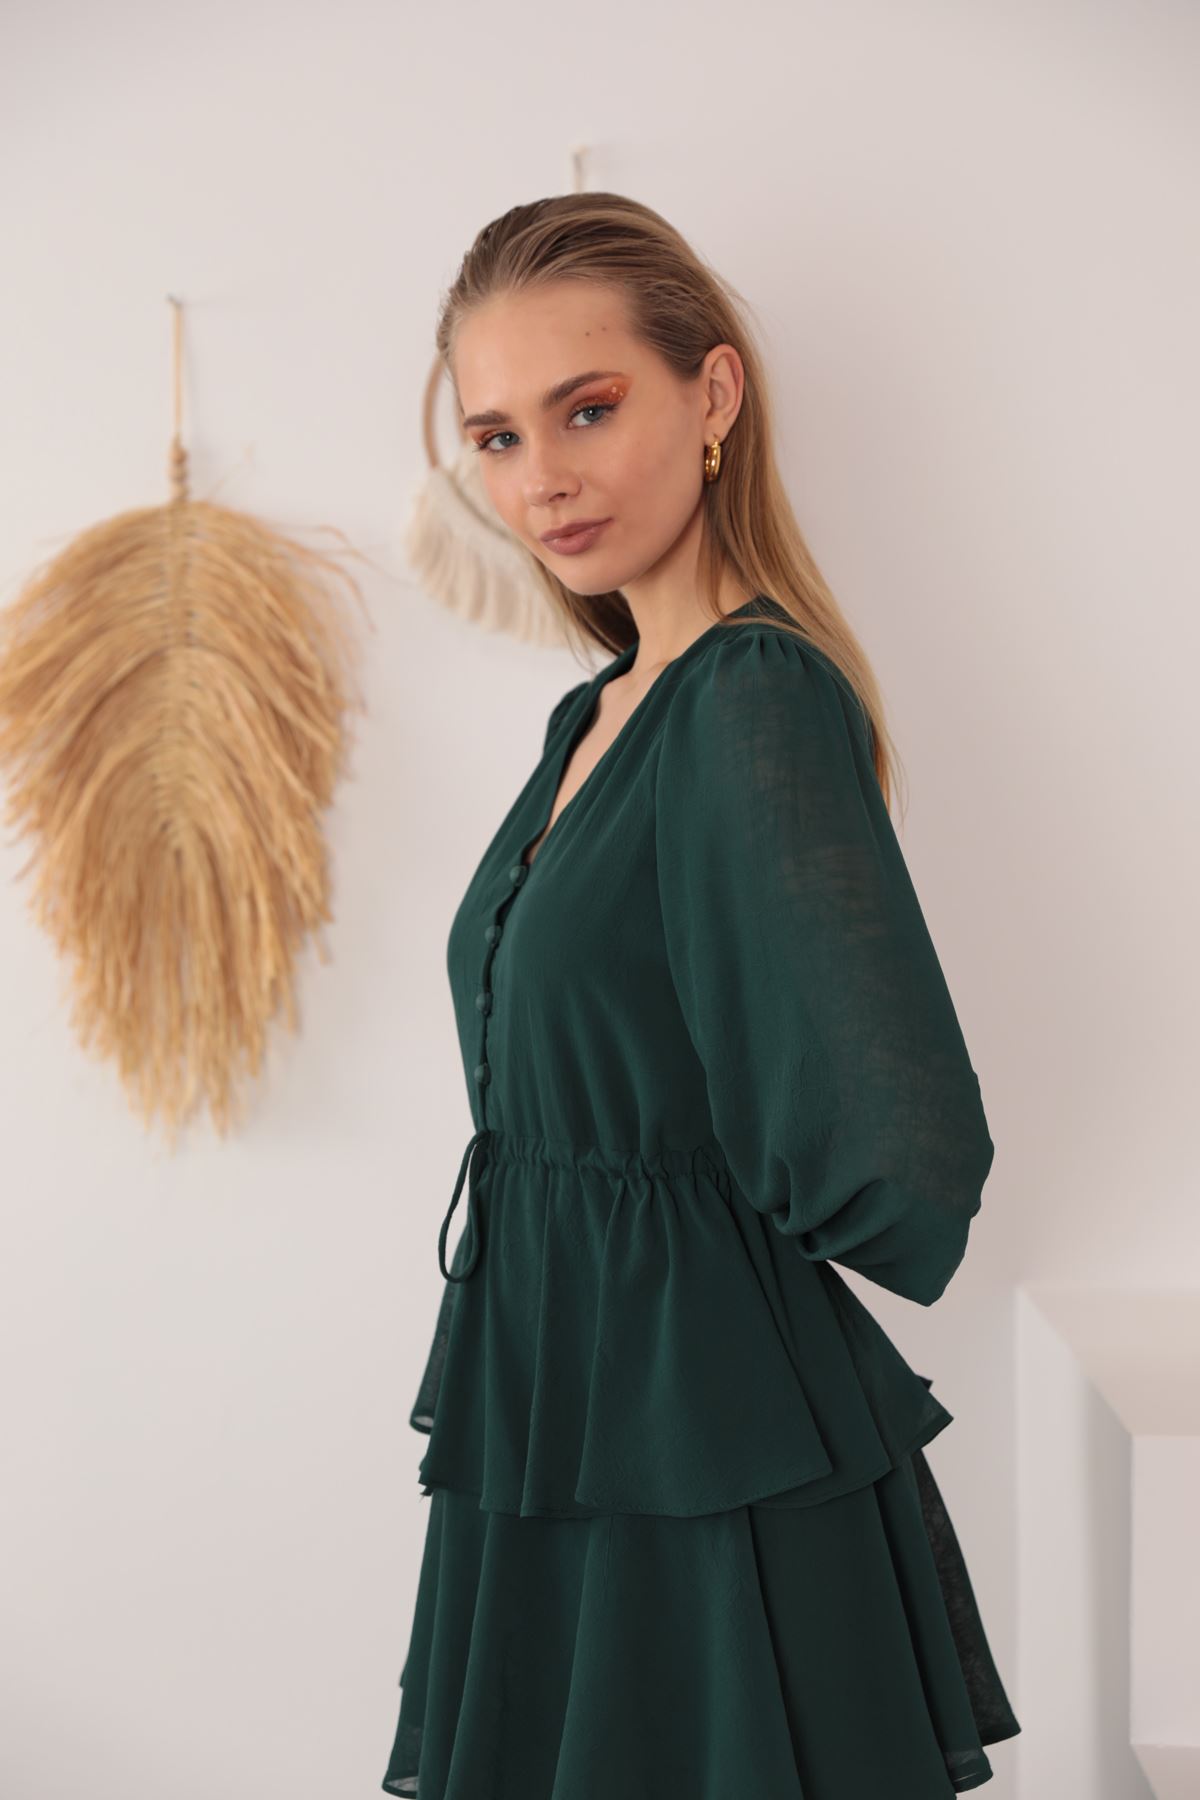 Aerobin Chiffon Fabric Layered Women's Dress-Green